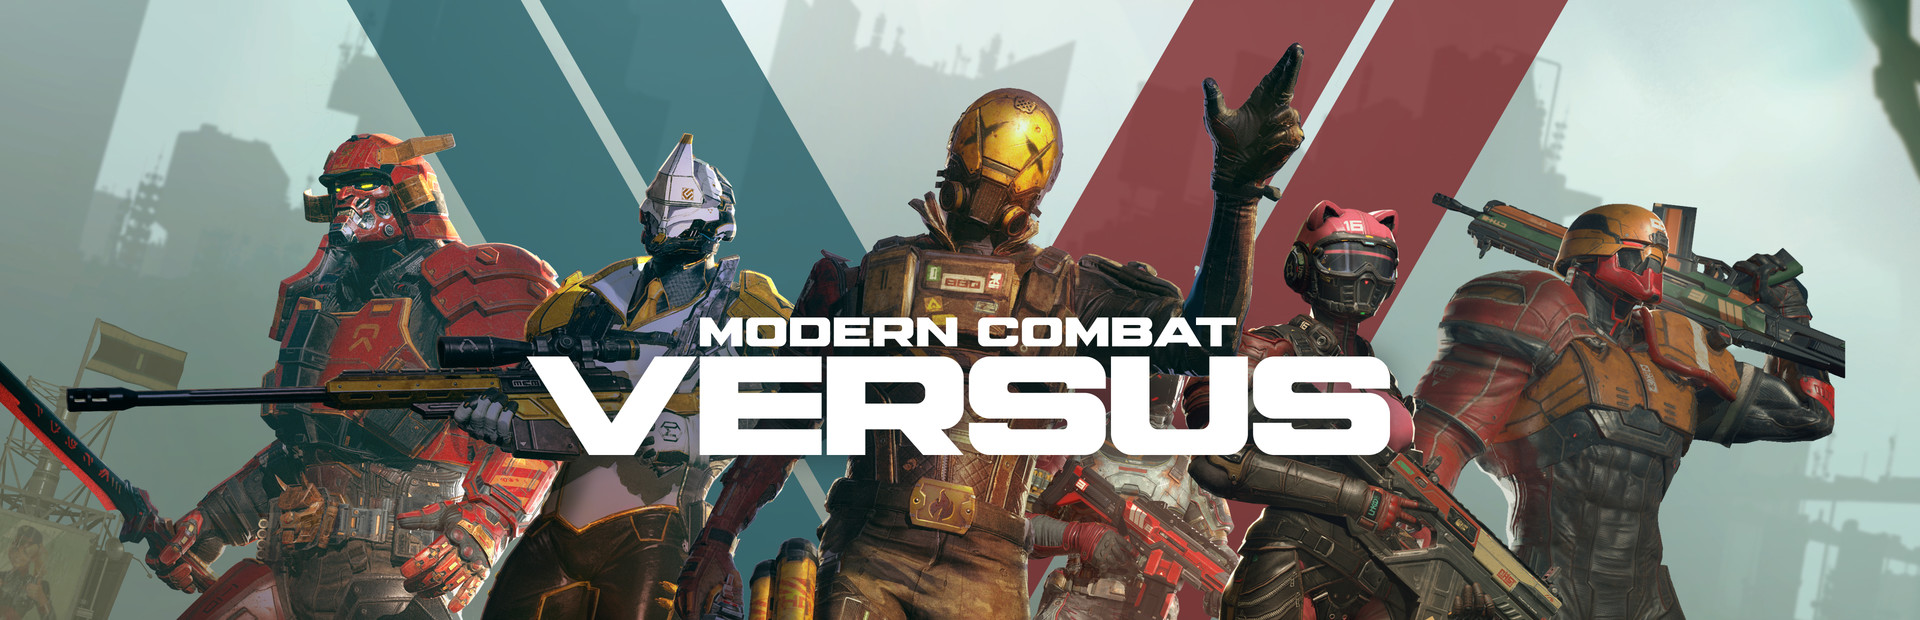 Modern Combat Versus cover image